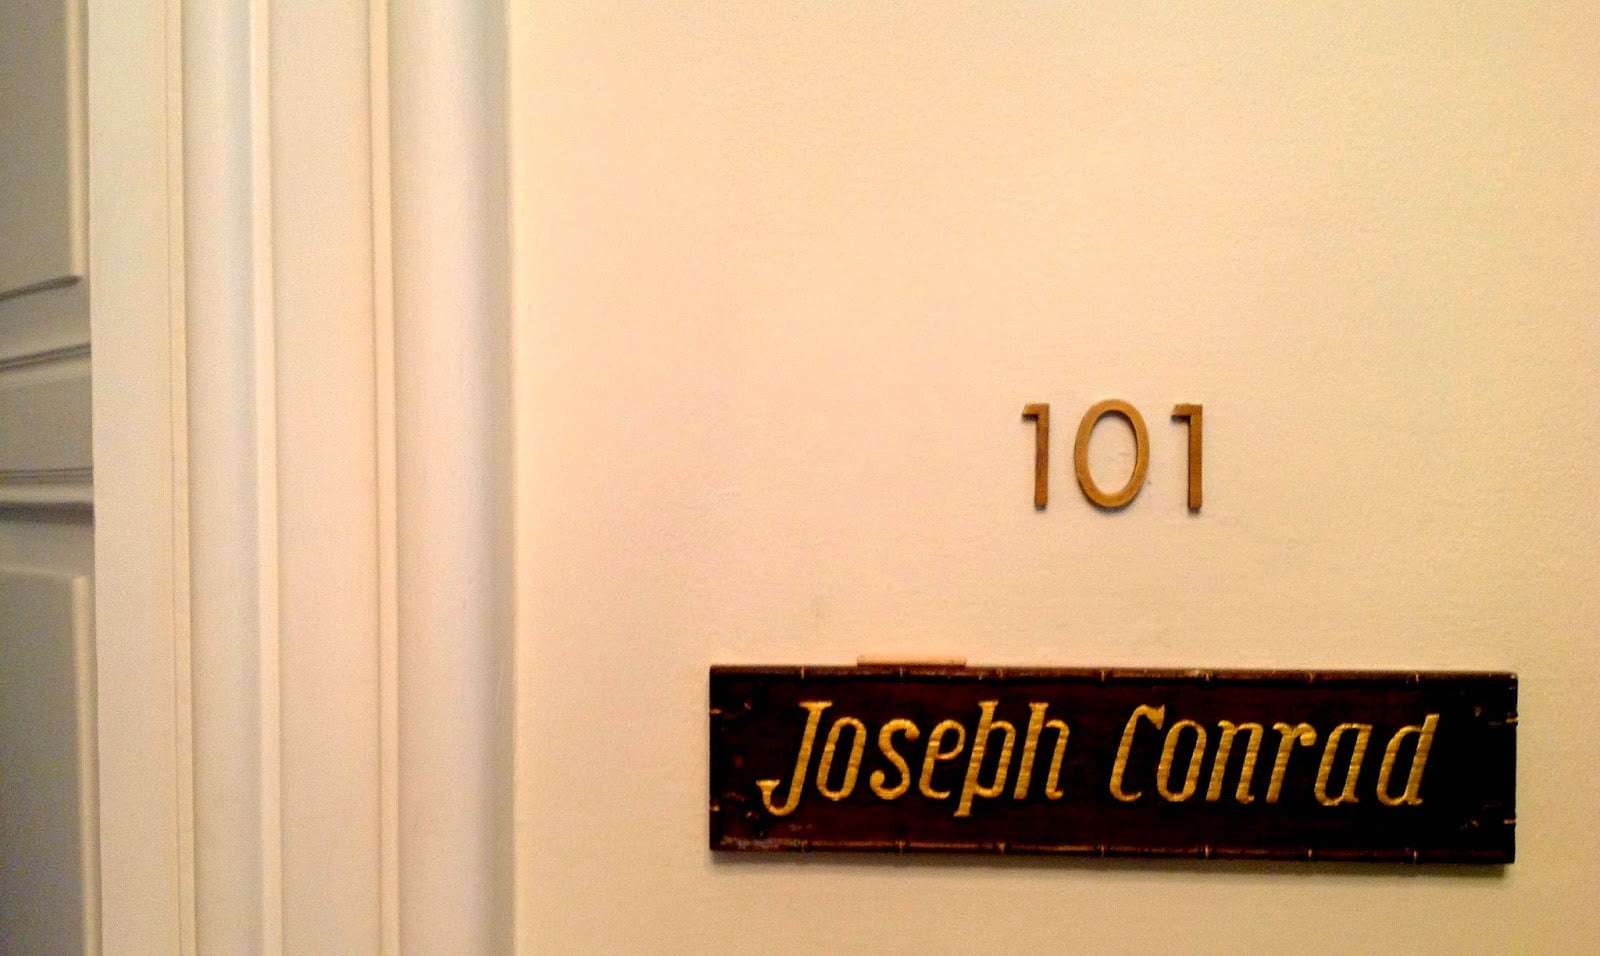 Joseph Conrad's room at the Mandarin Oriental